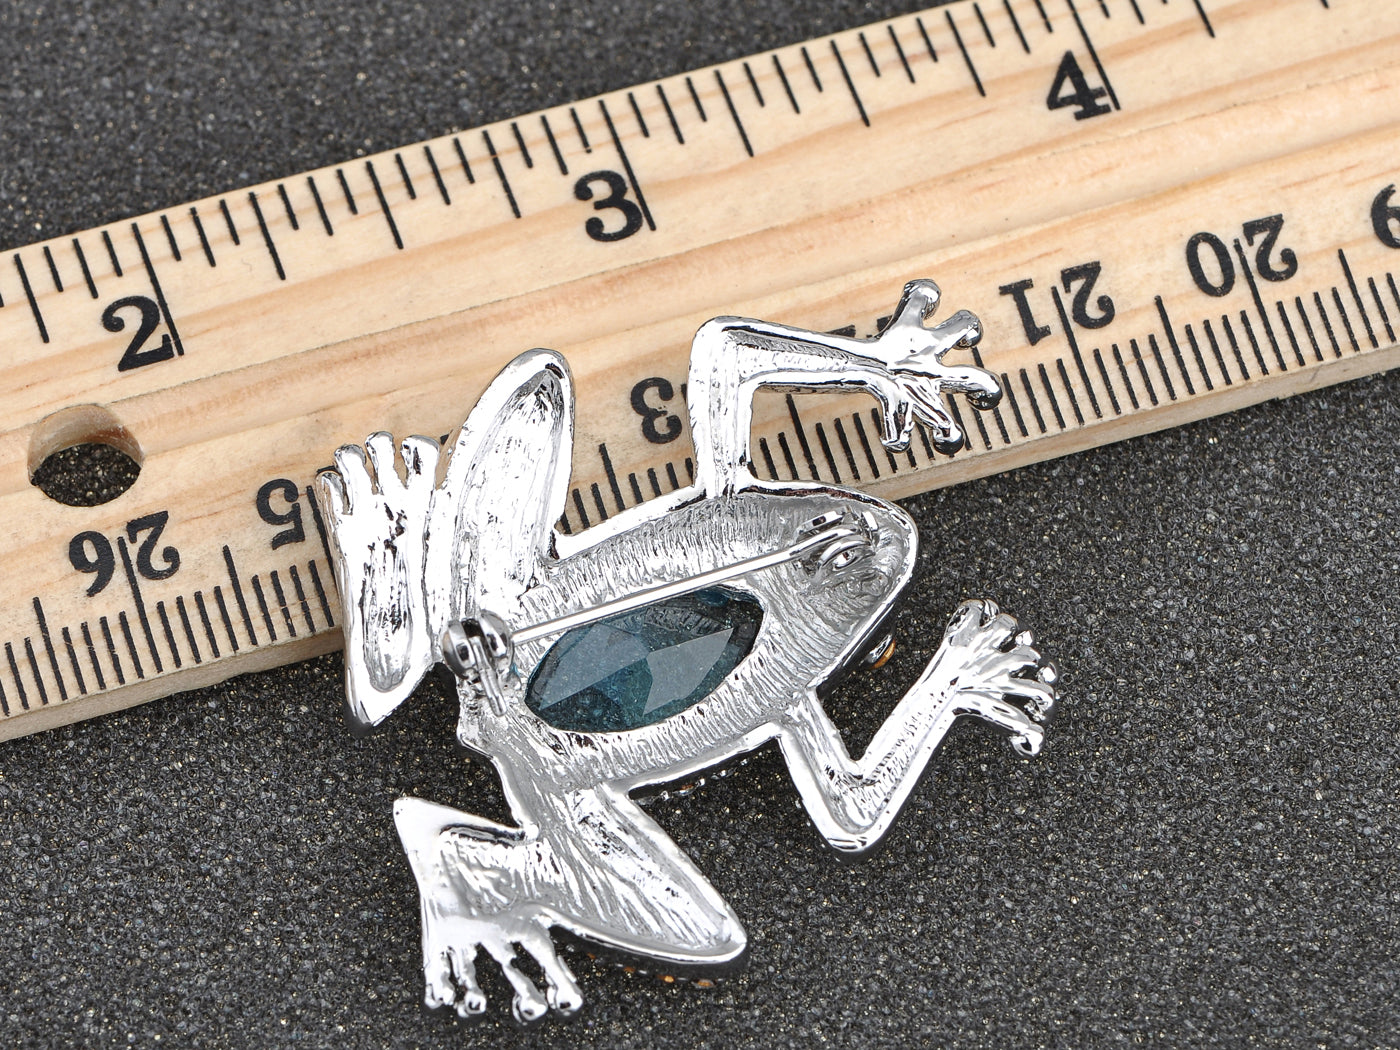 Czech Emerald Frog Jewelry Pin Brooch